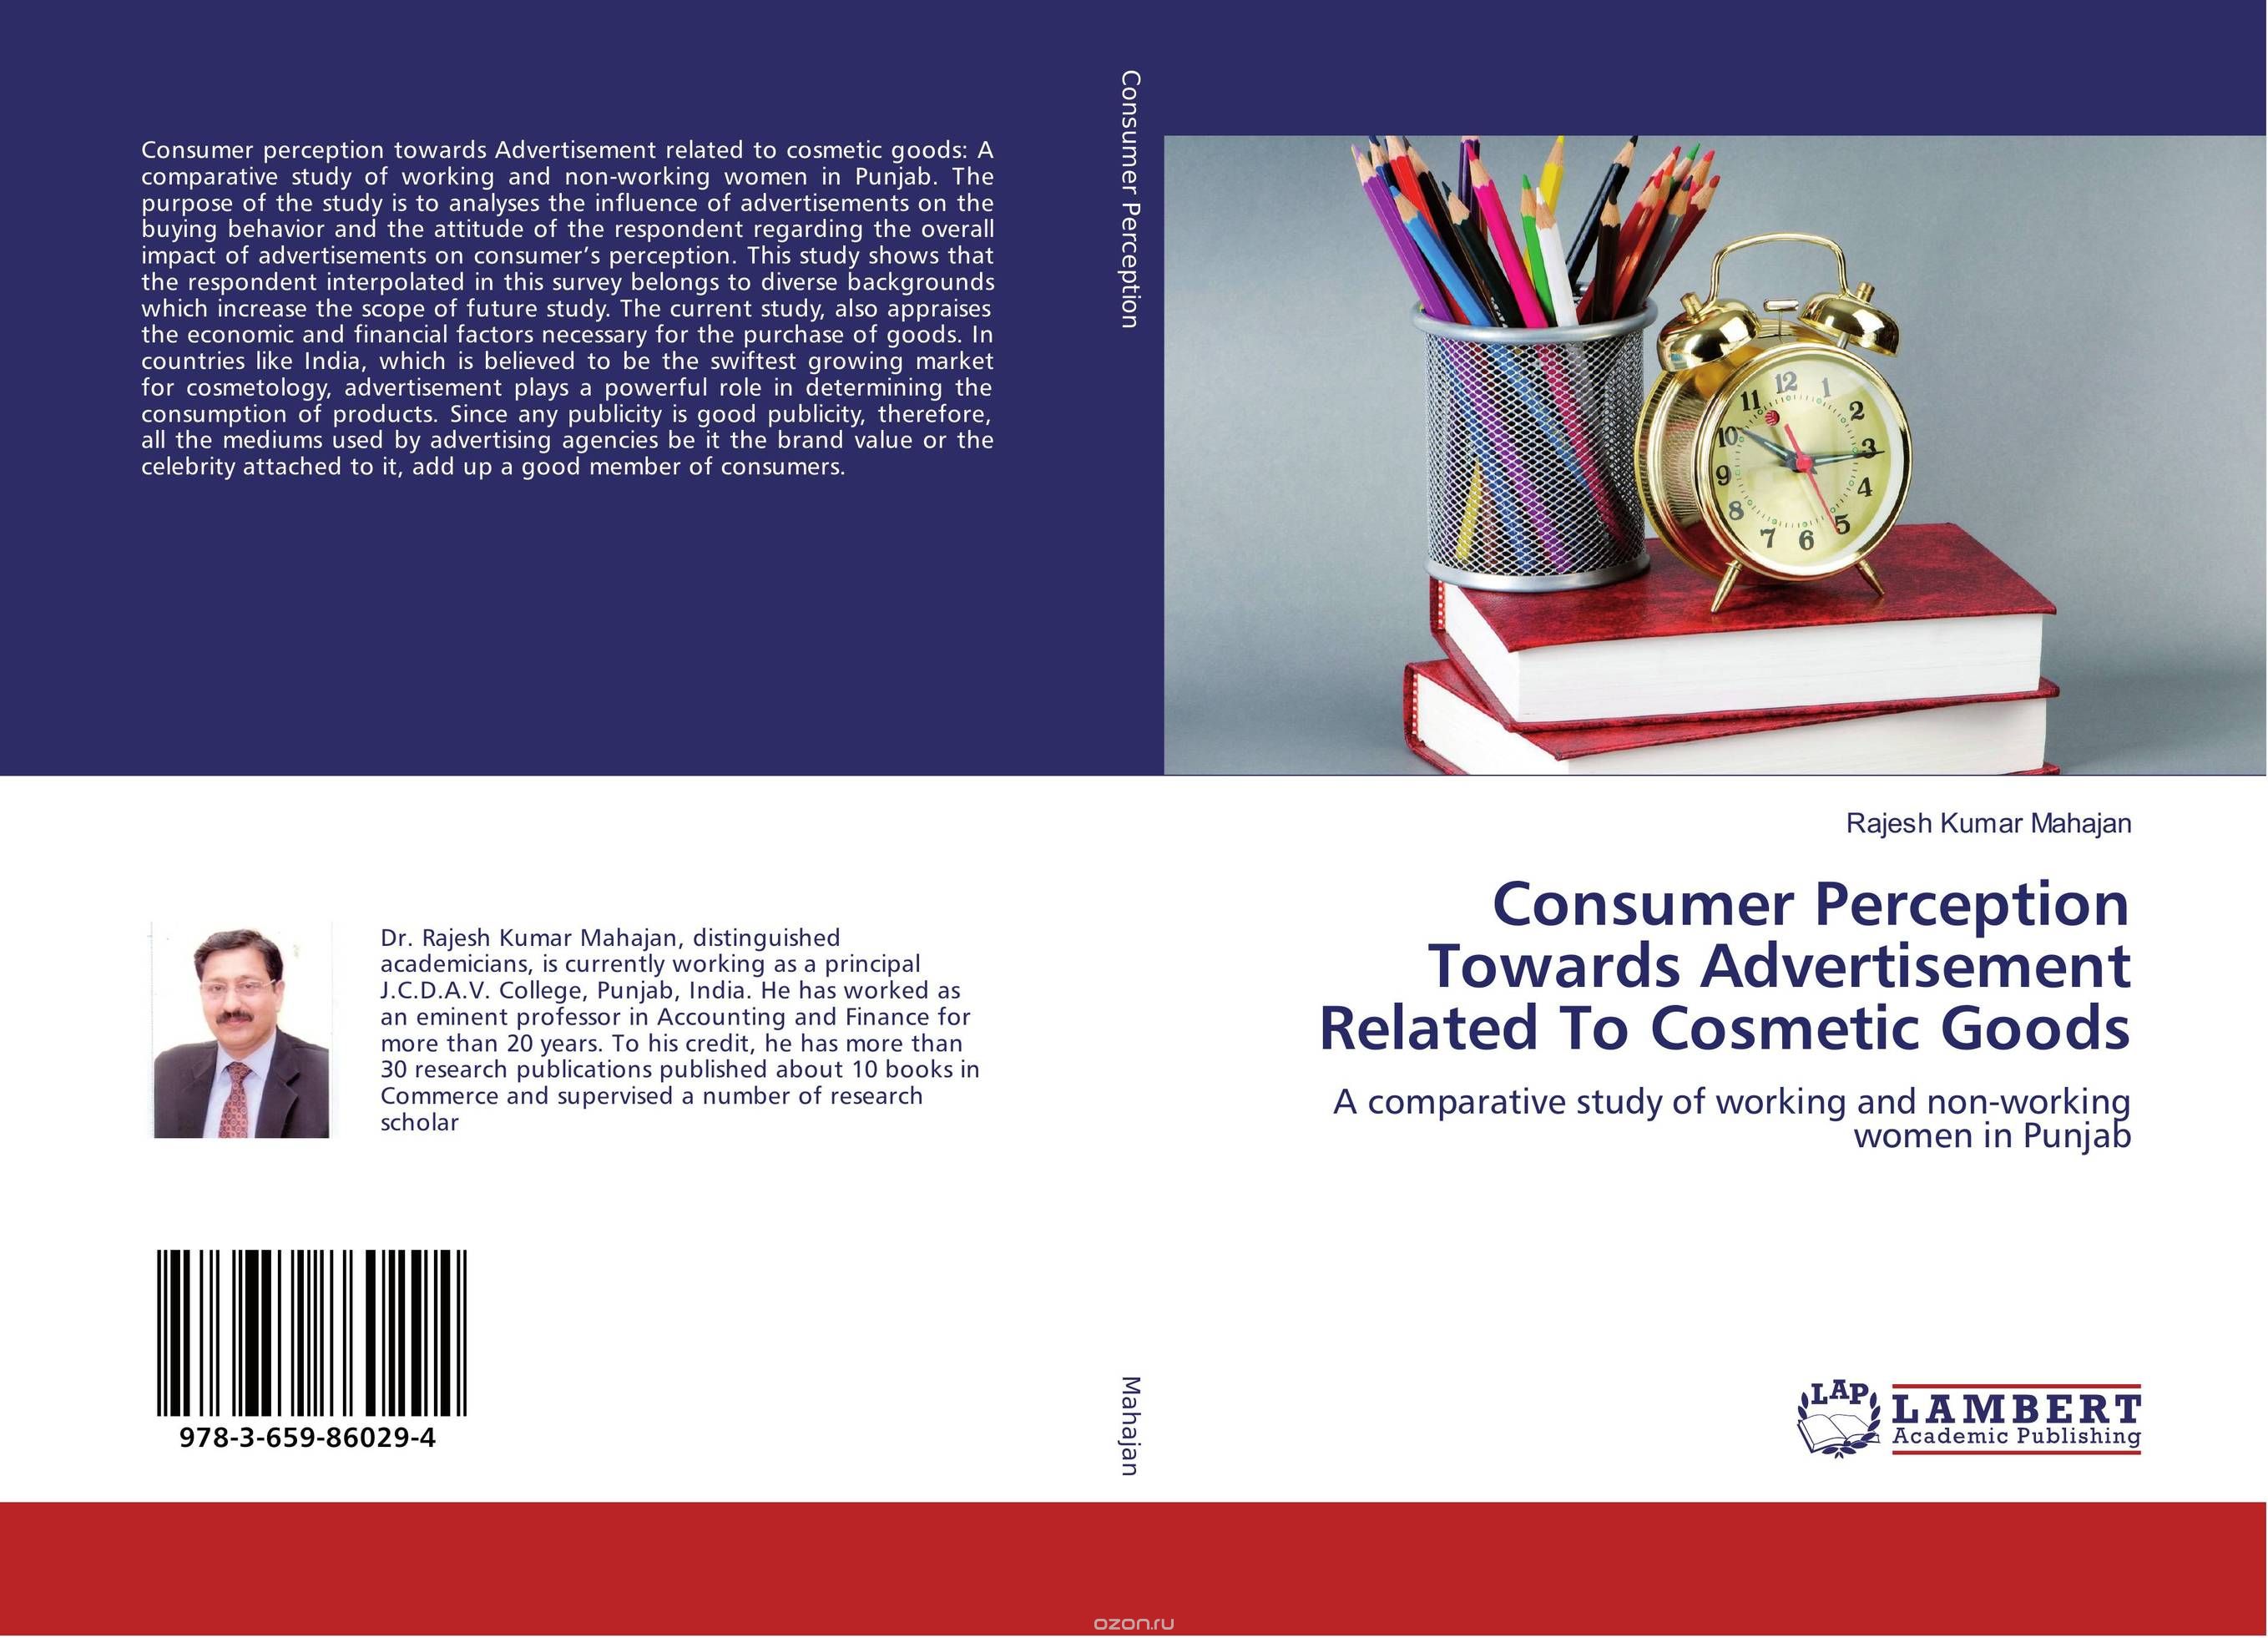 Скачать книгу "Consumer Perception Towards Advertisement Related To Cosmetic Goods"